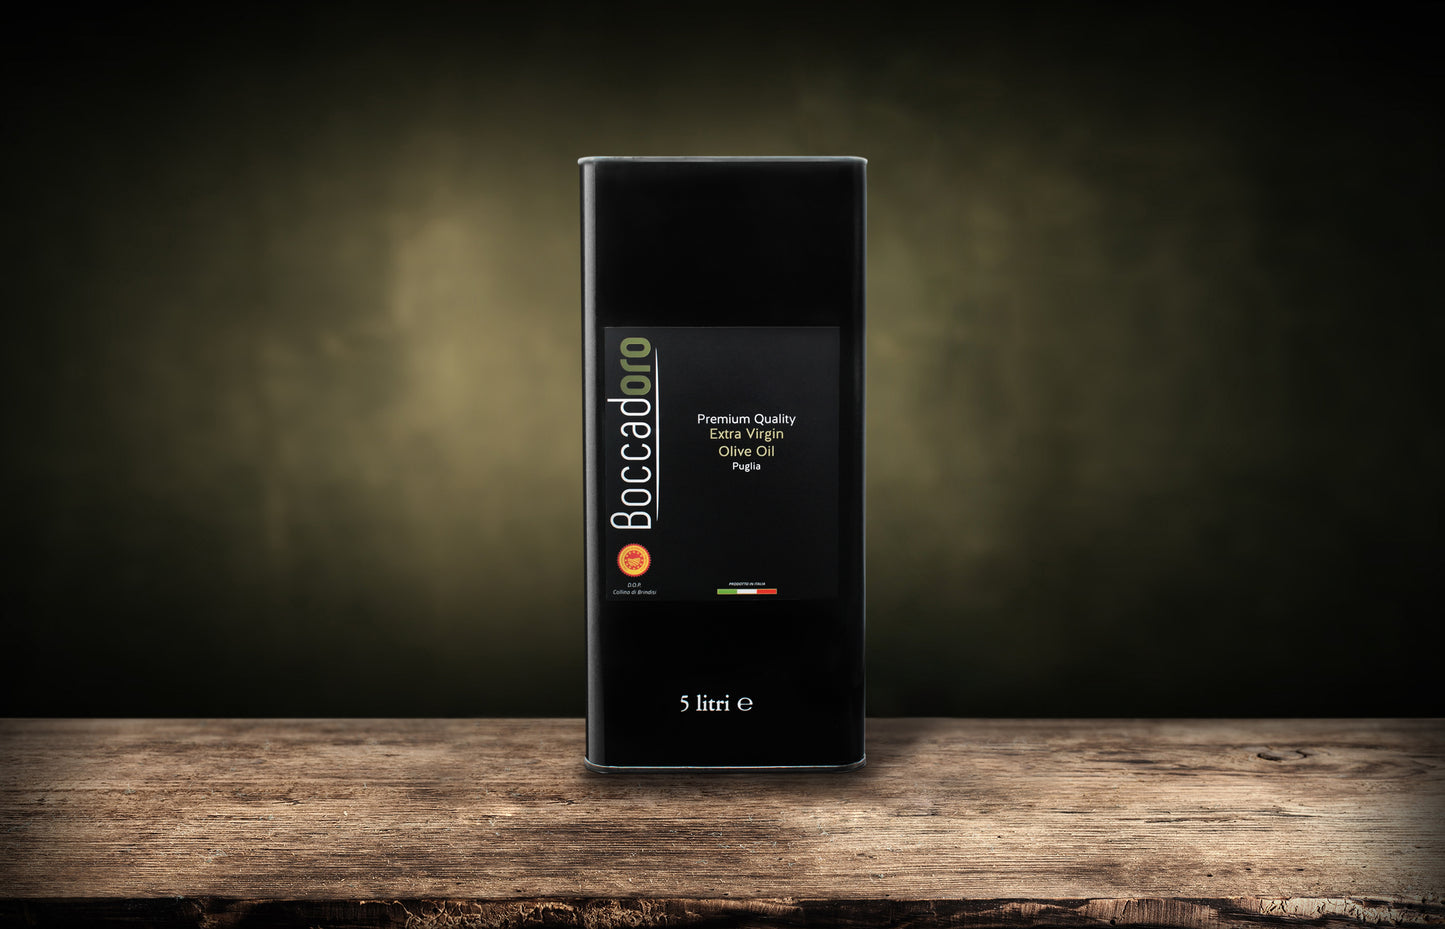 Boccadoro Premium Quality Extra Virgin Olive Oil - 5 Litre (2021/22 Harvest)